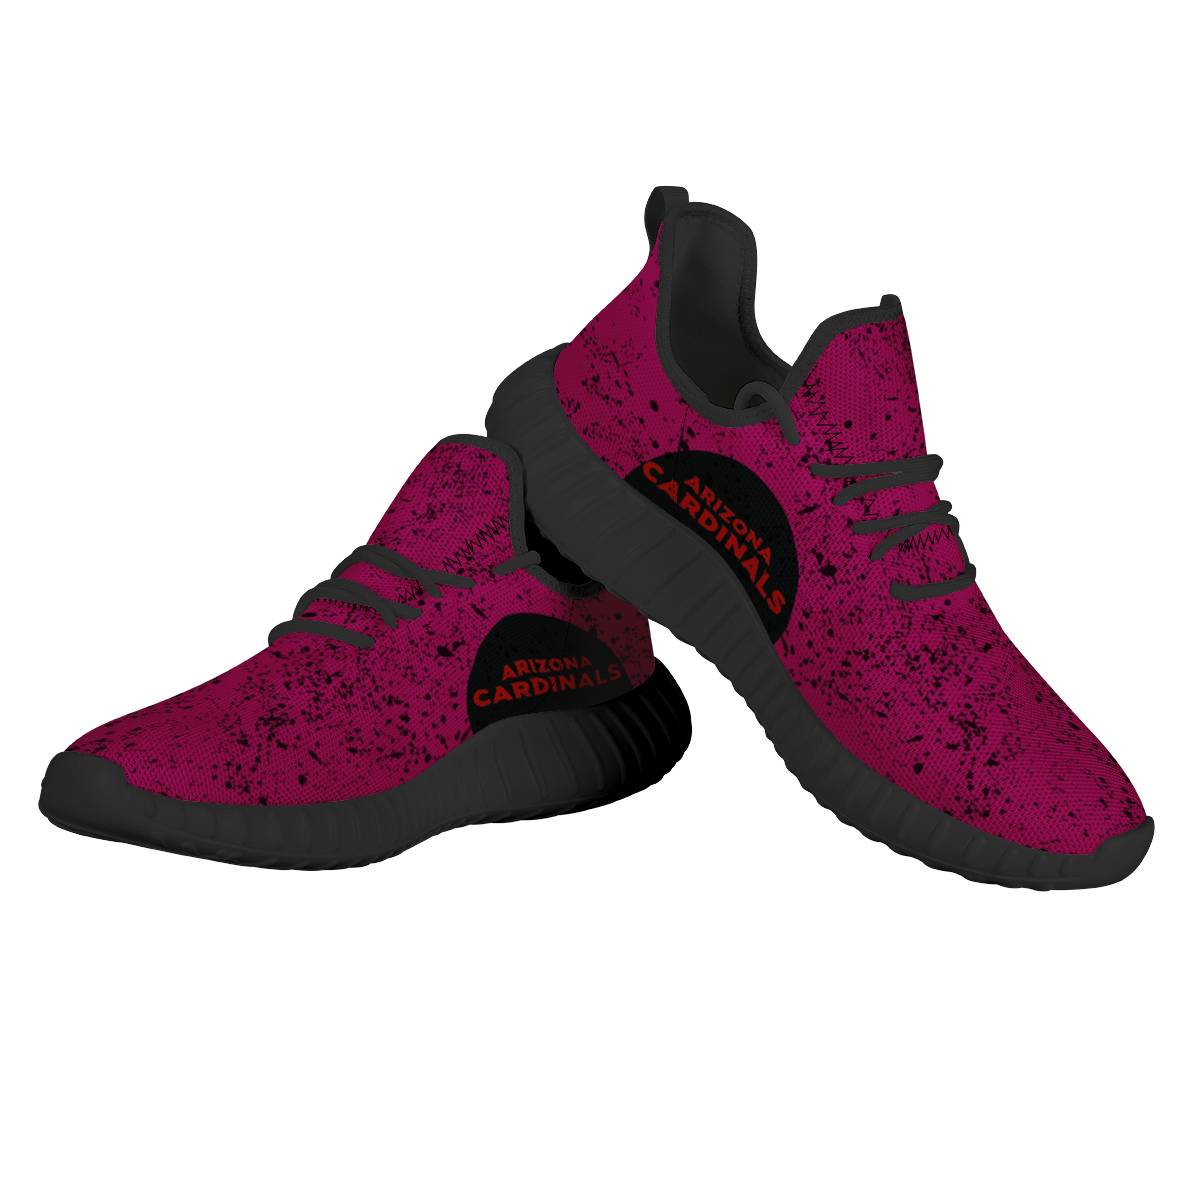 Men's Arizona Cardinals Mesh Knit Sneakers/Shoes 011